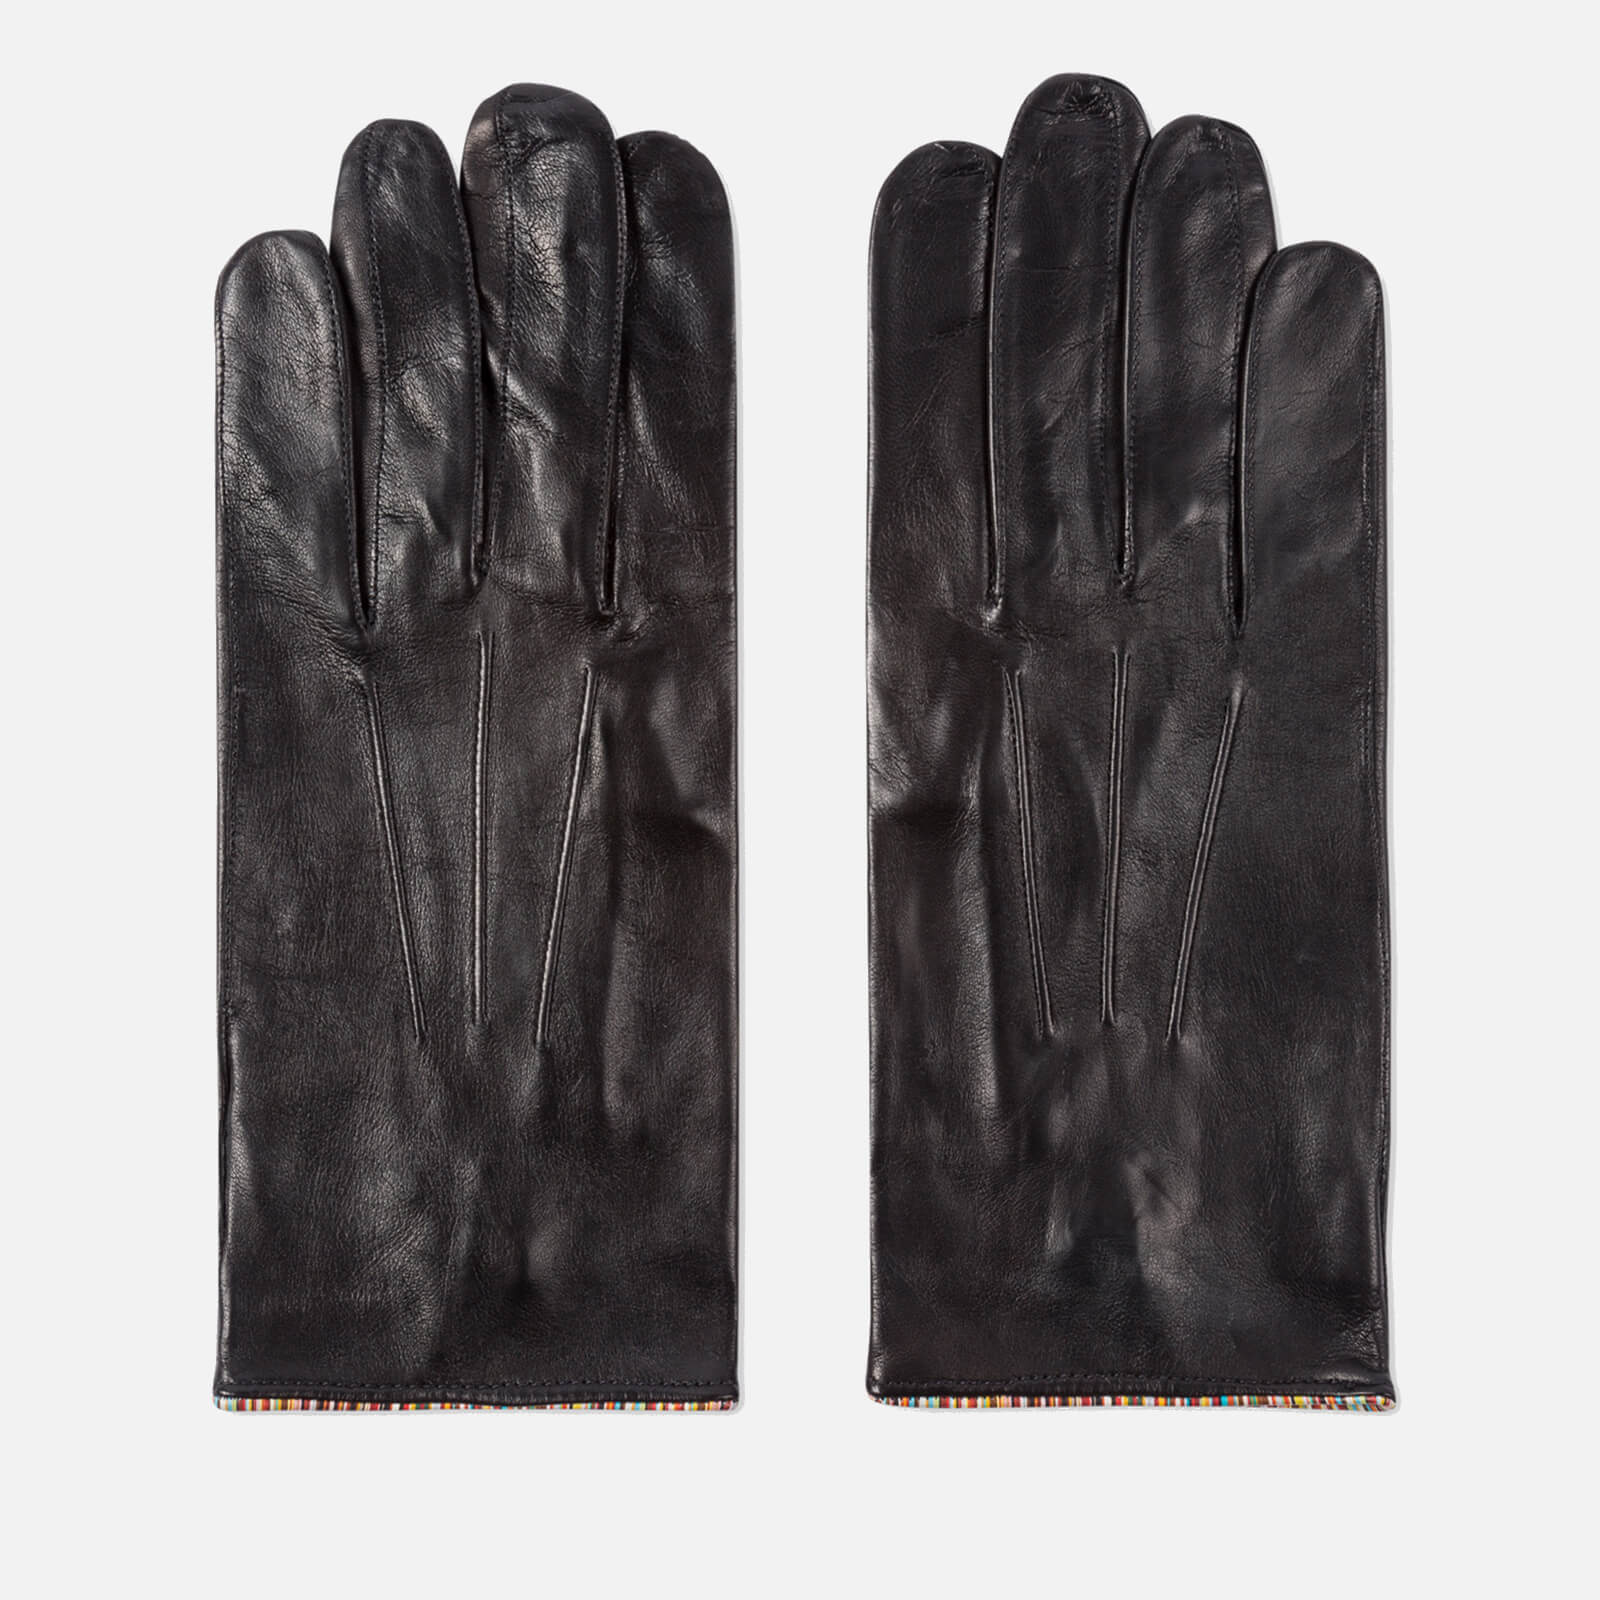 Paul Smith Leather Gloves - M von Paul Smith